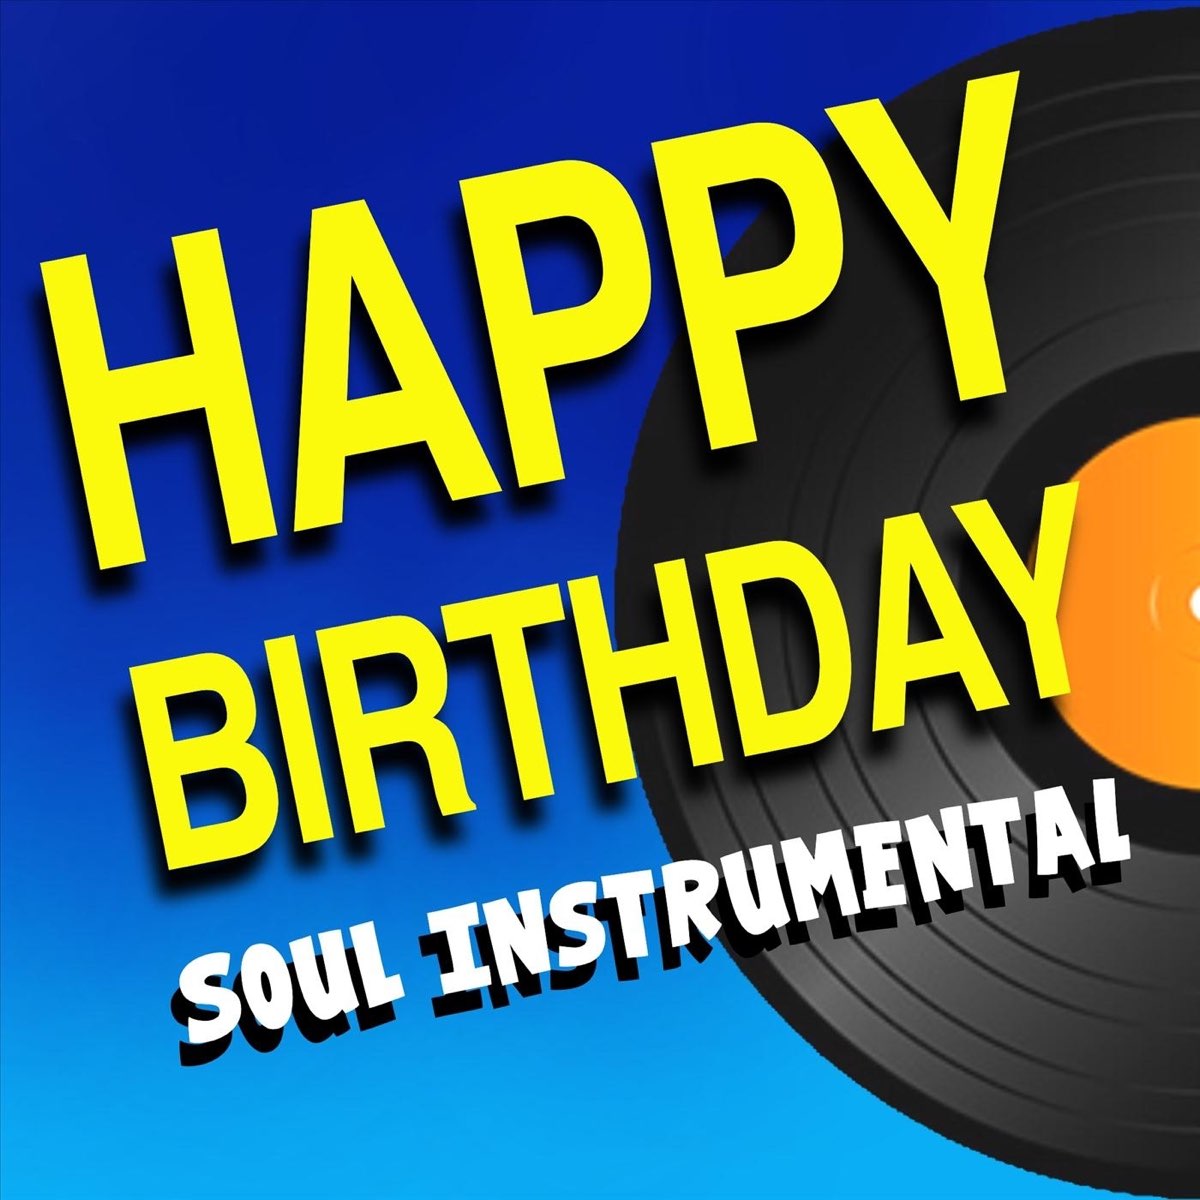 Happy Birthday (Soul Instrumental) - Single by Happy Birthday on Apple Music